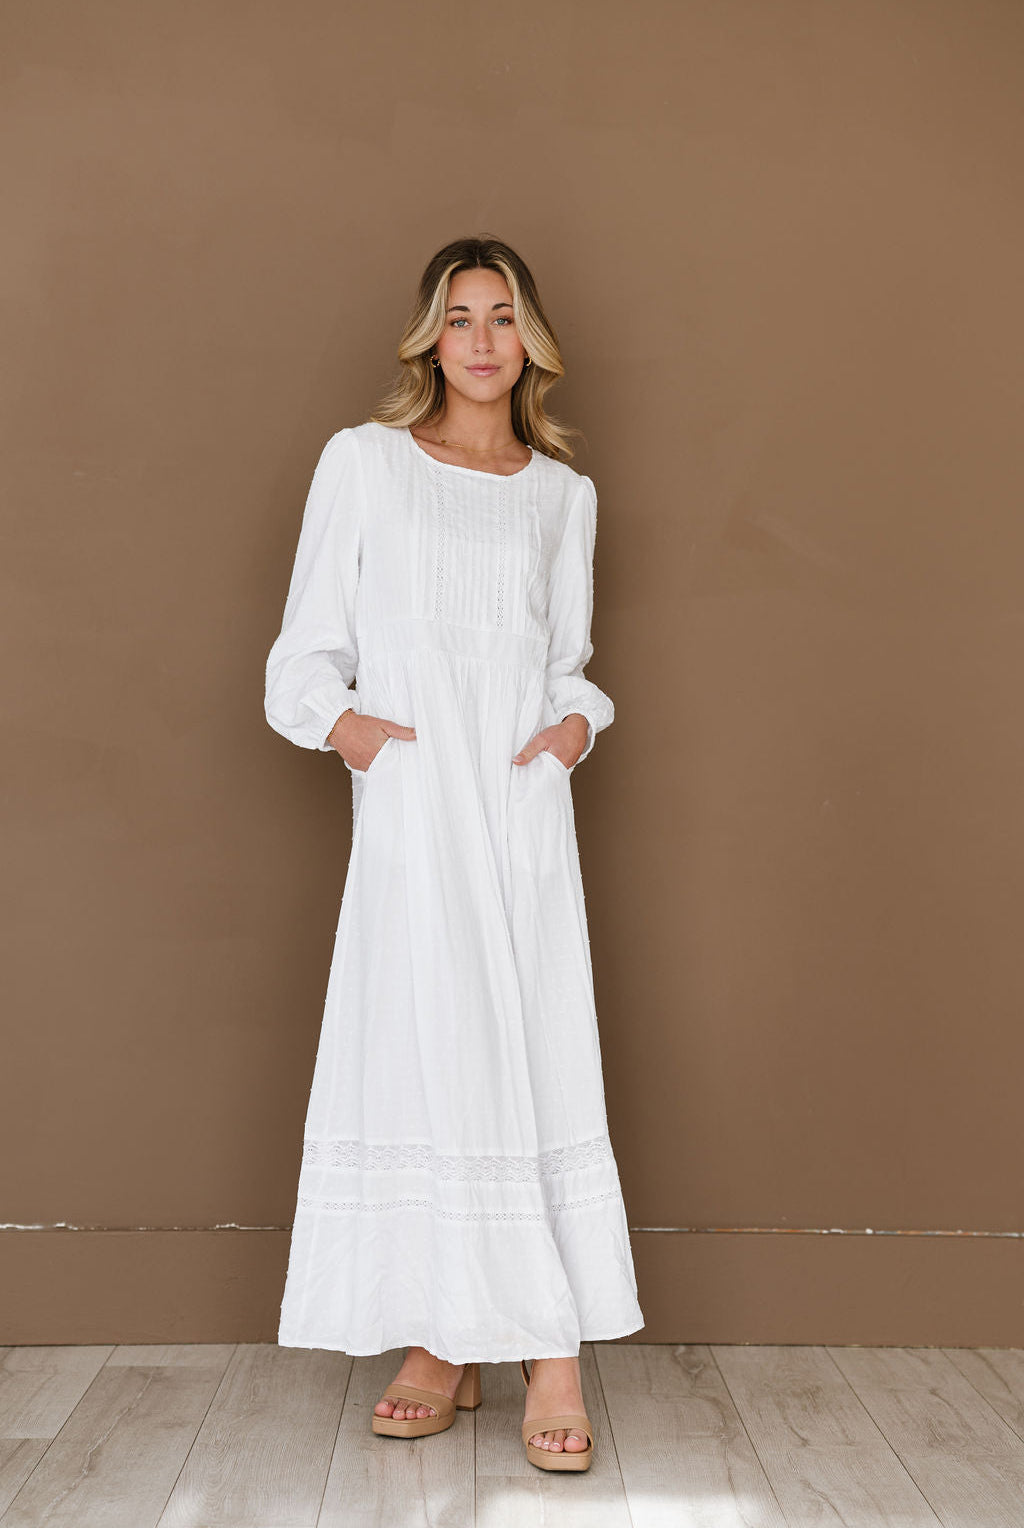 Modest white dresses